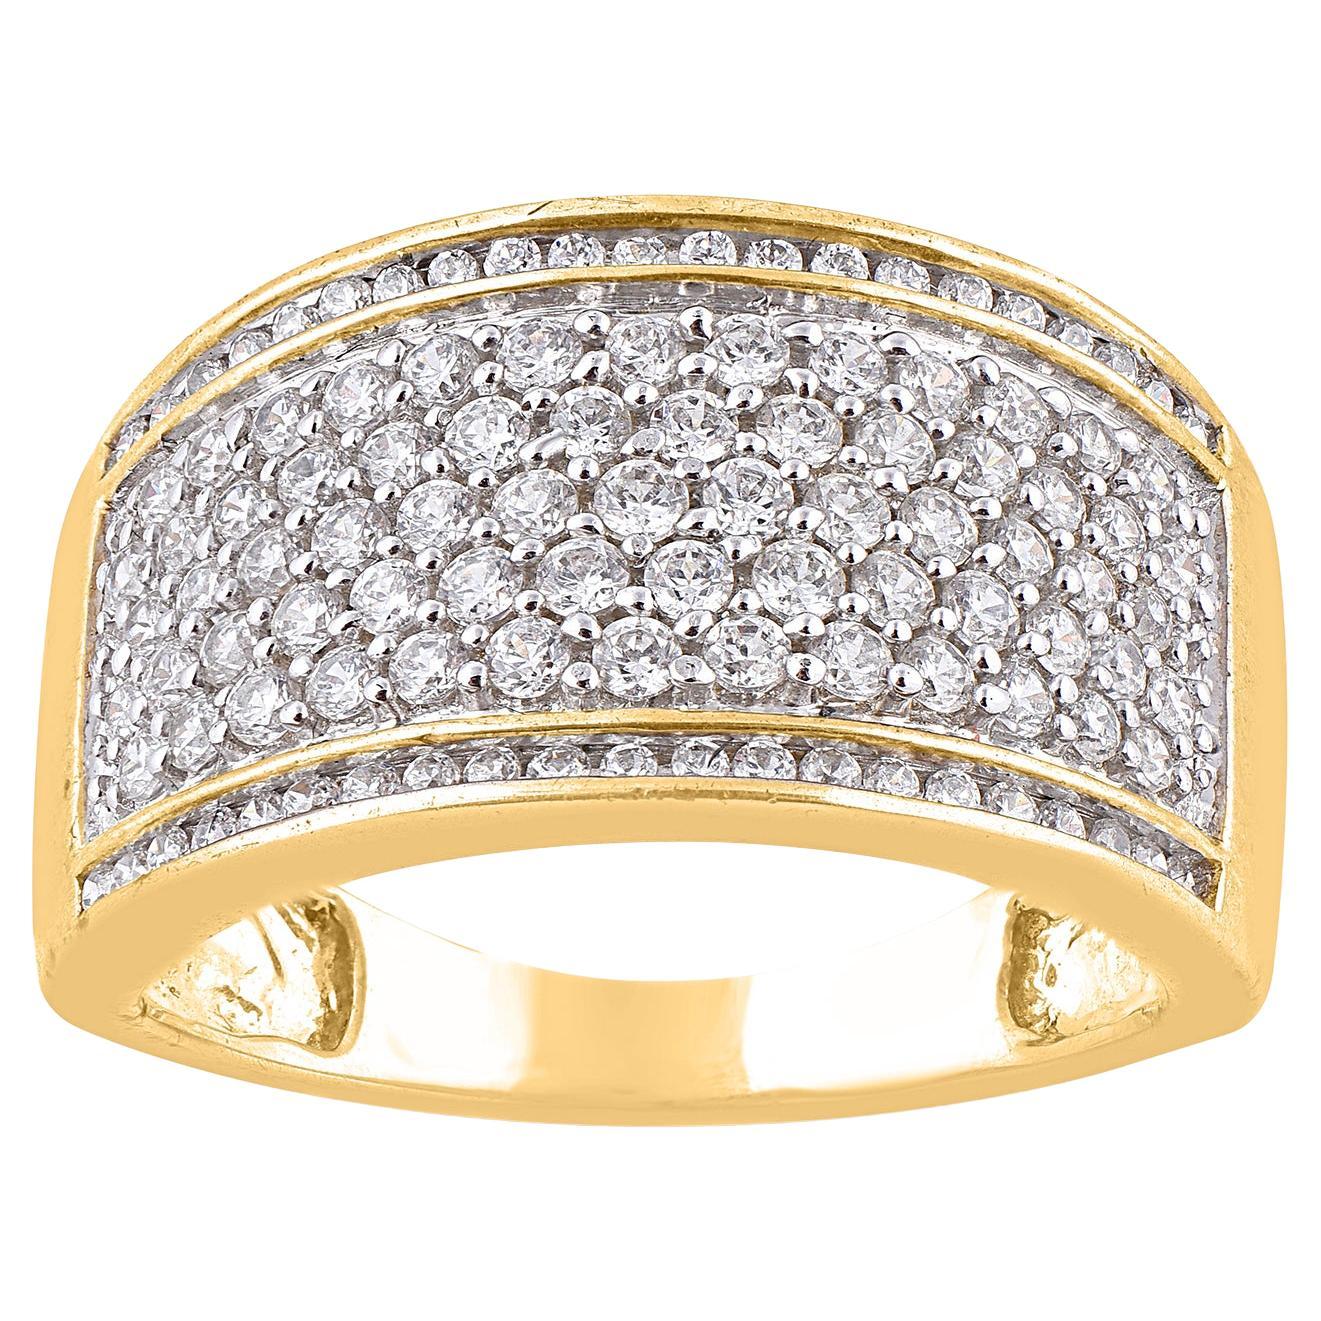 TJD 1.0 Carat Natural Round Diamond Wedding Band Ring in 14 Karat Yellow Gold For Sale